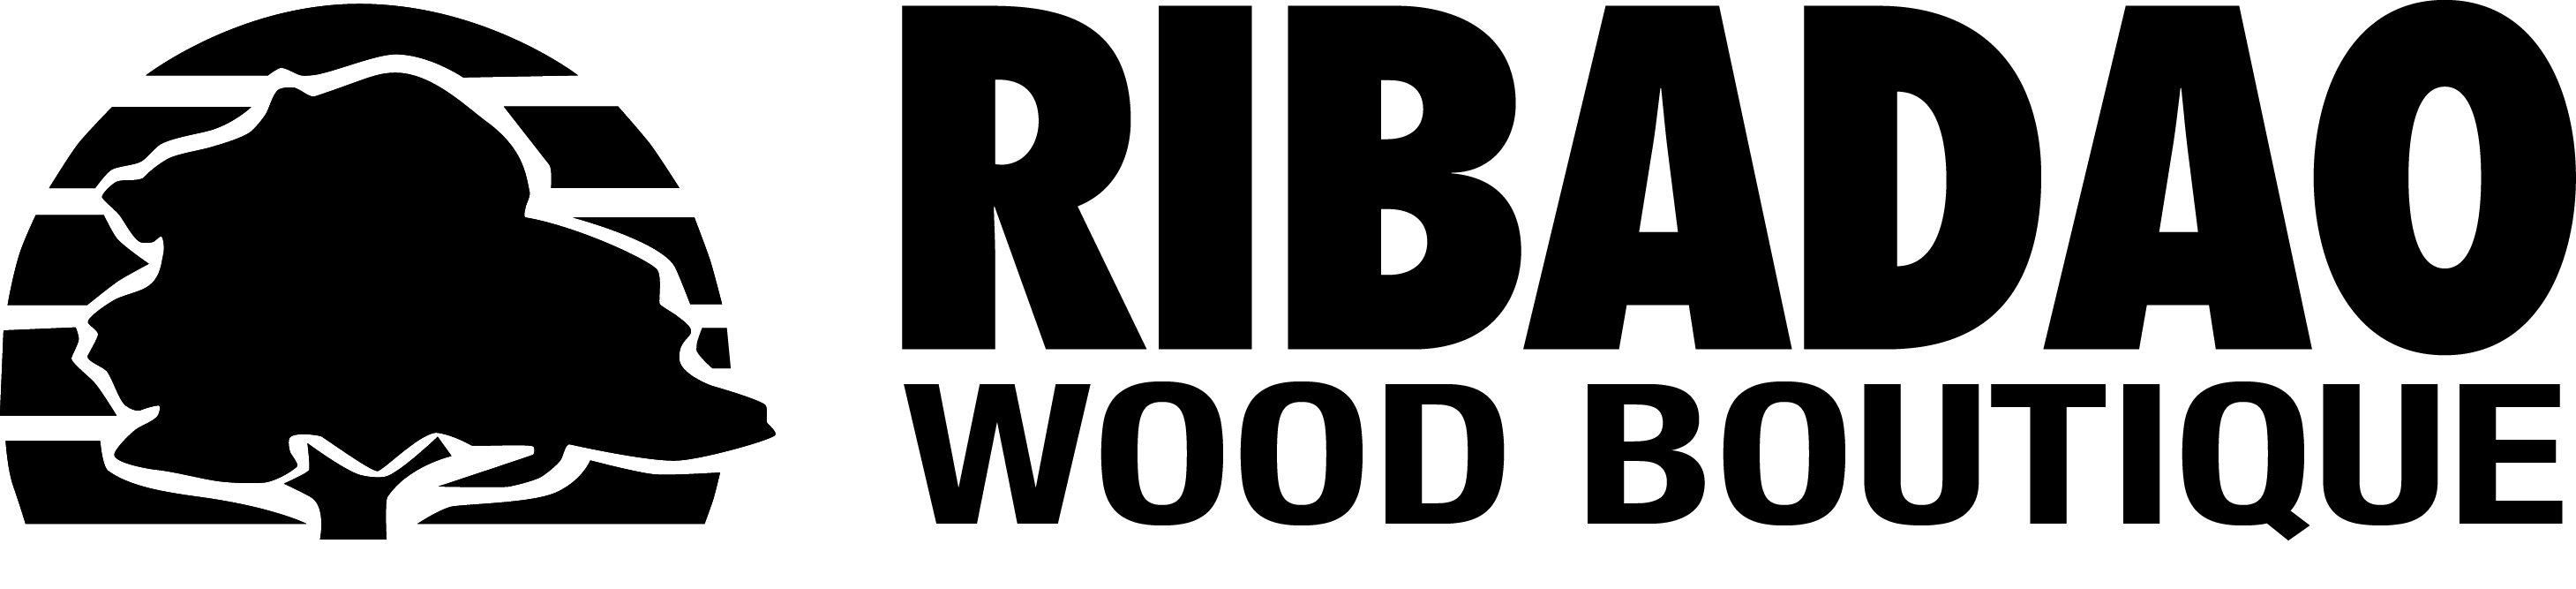 Ribado Wood Boutique